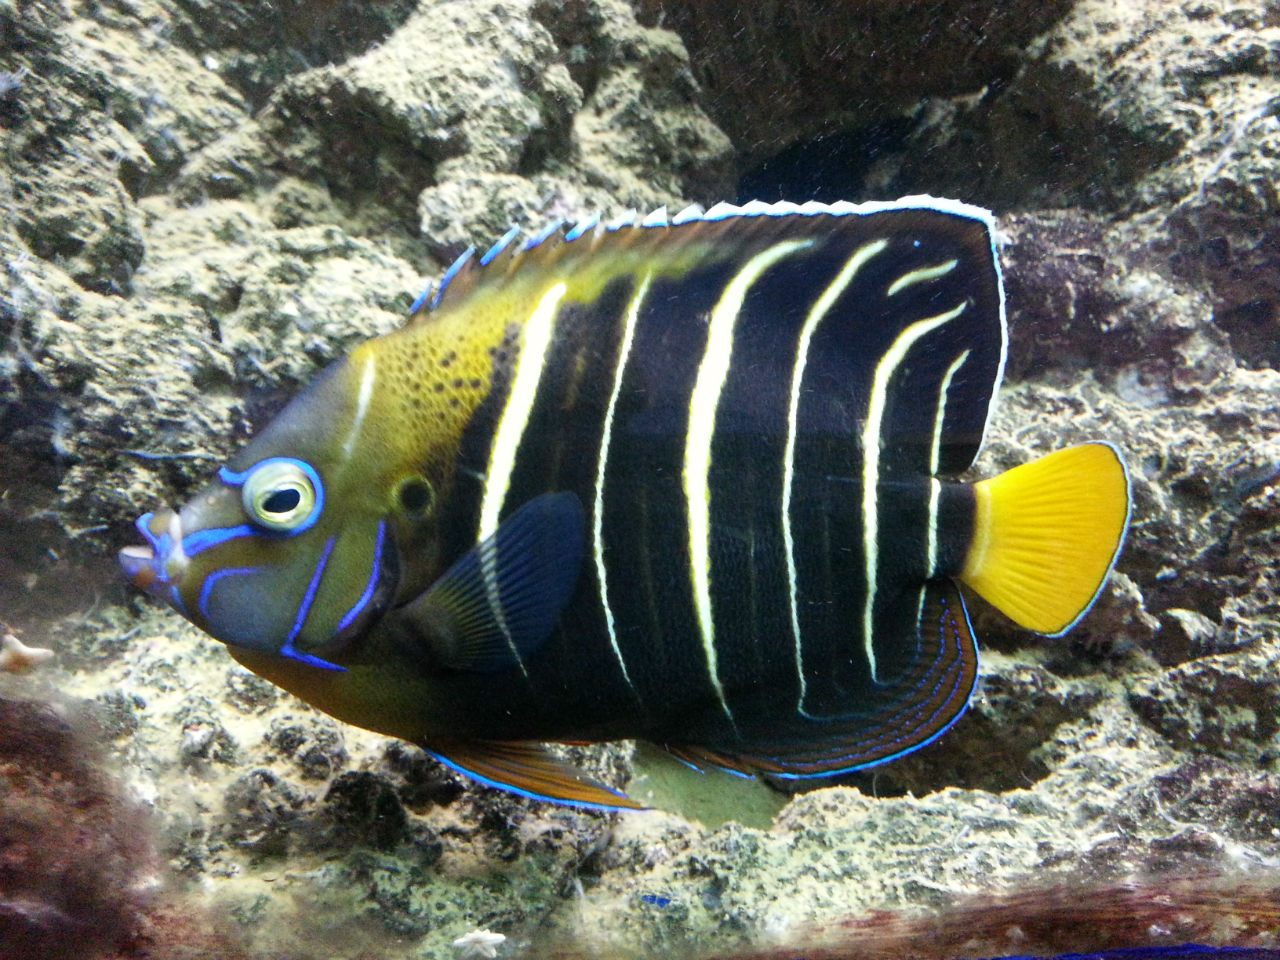 L'aquarium contient de nombreuses espèces de poissons